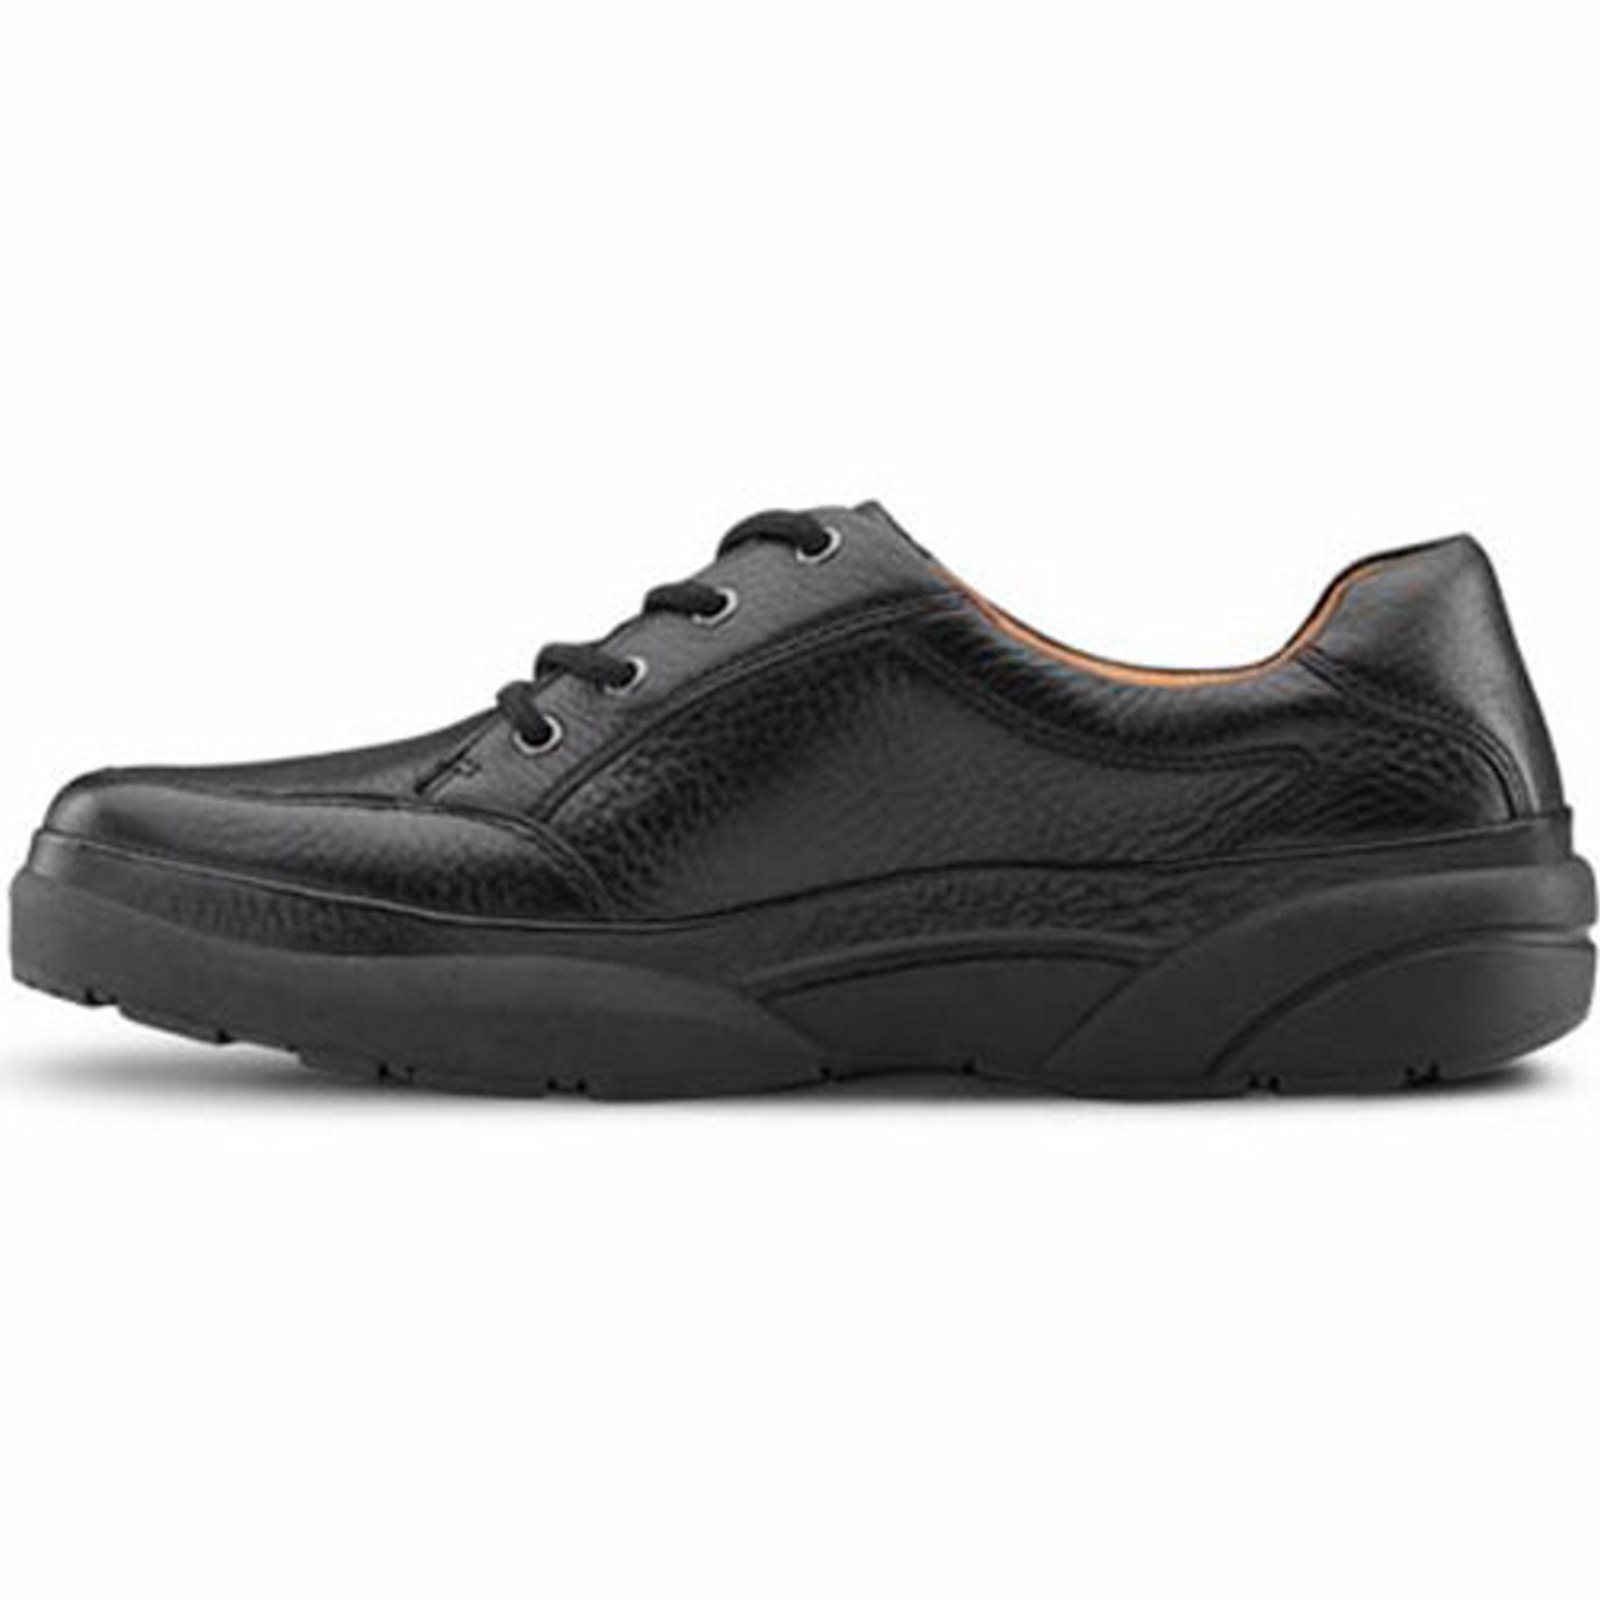 Dr. Comfort Justin Men's Casual Shoe: 8.5 Wide (E/2E) Black Lace - image 4 of 5